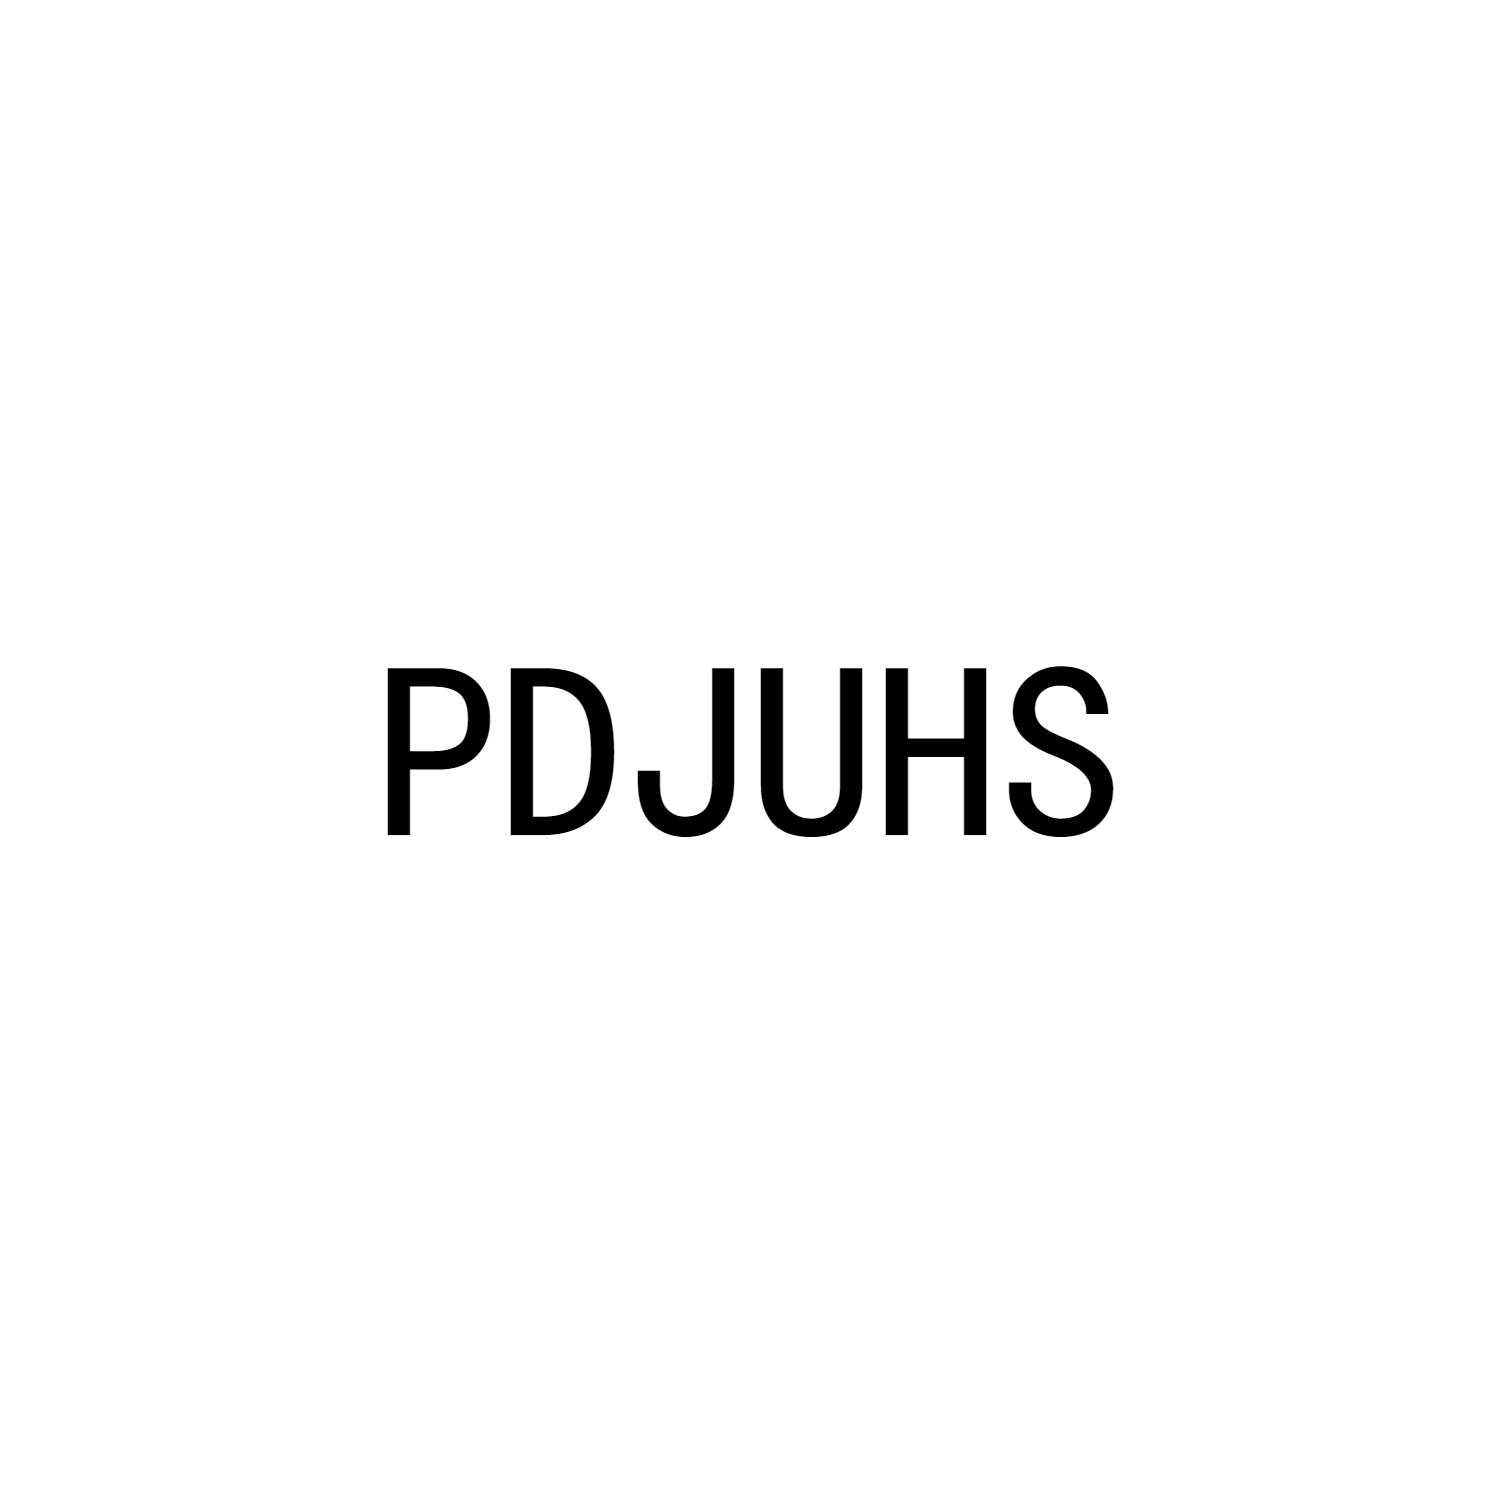 PDJUHS